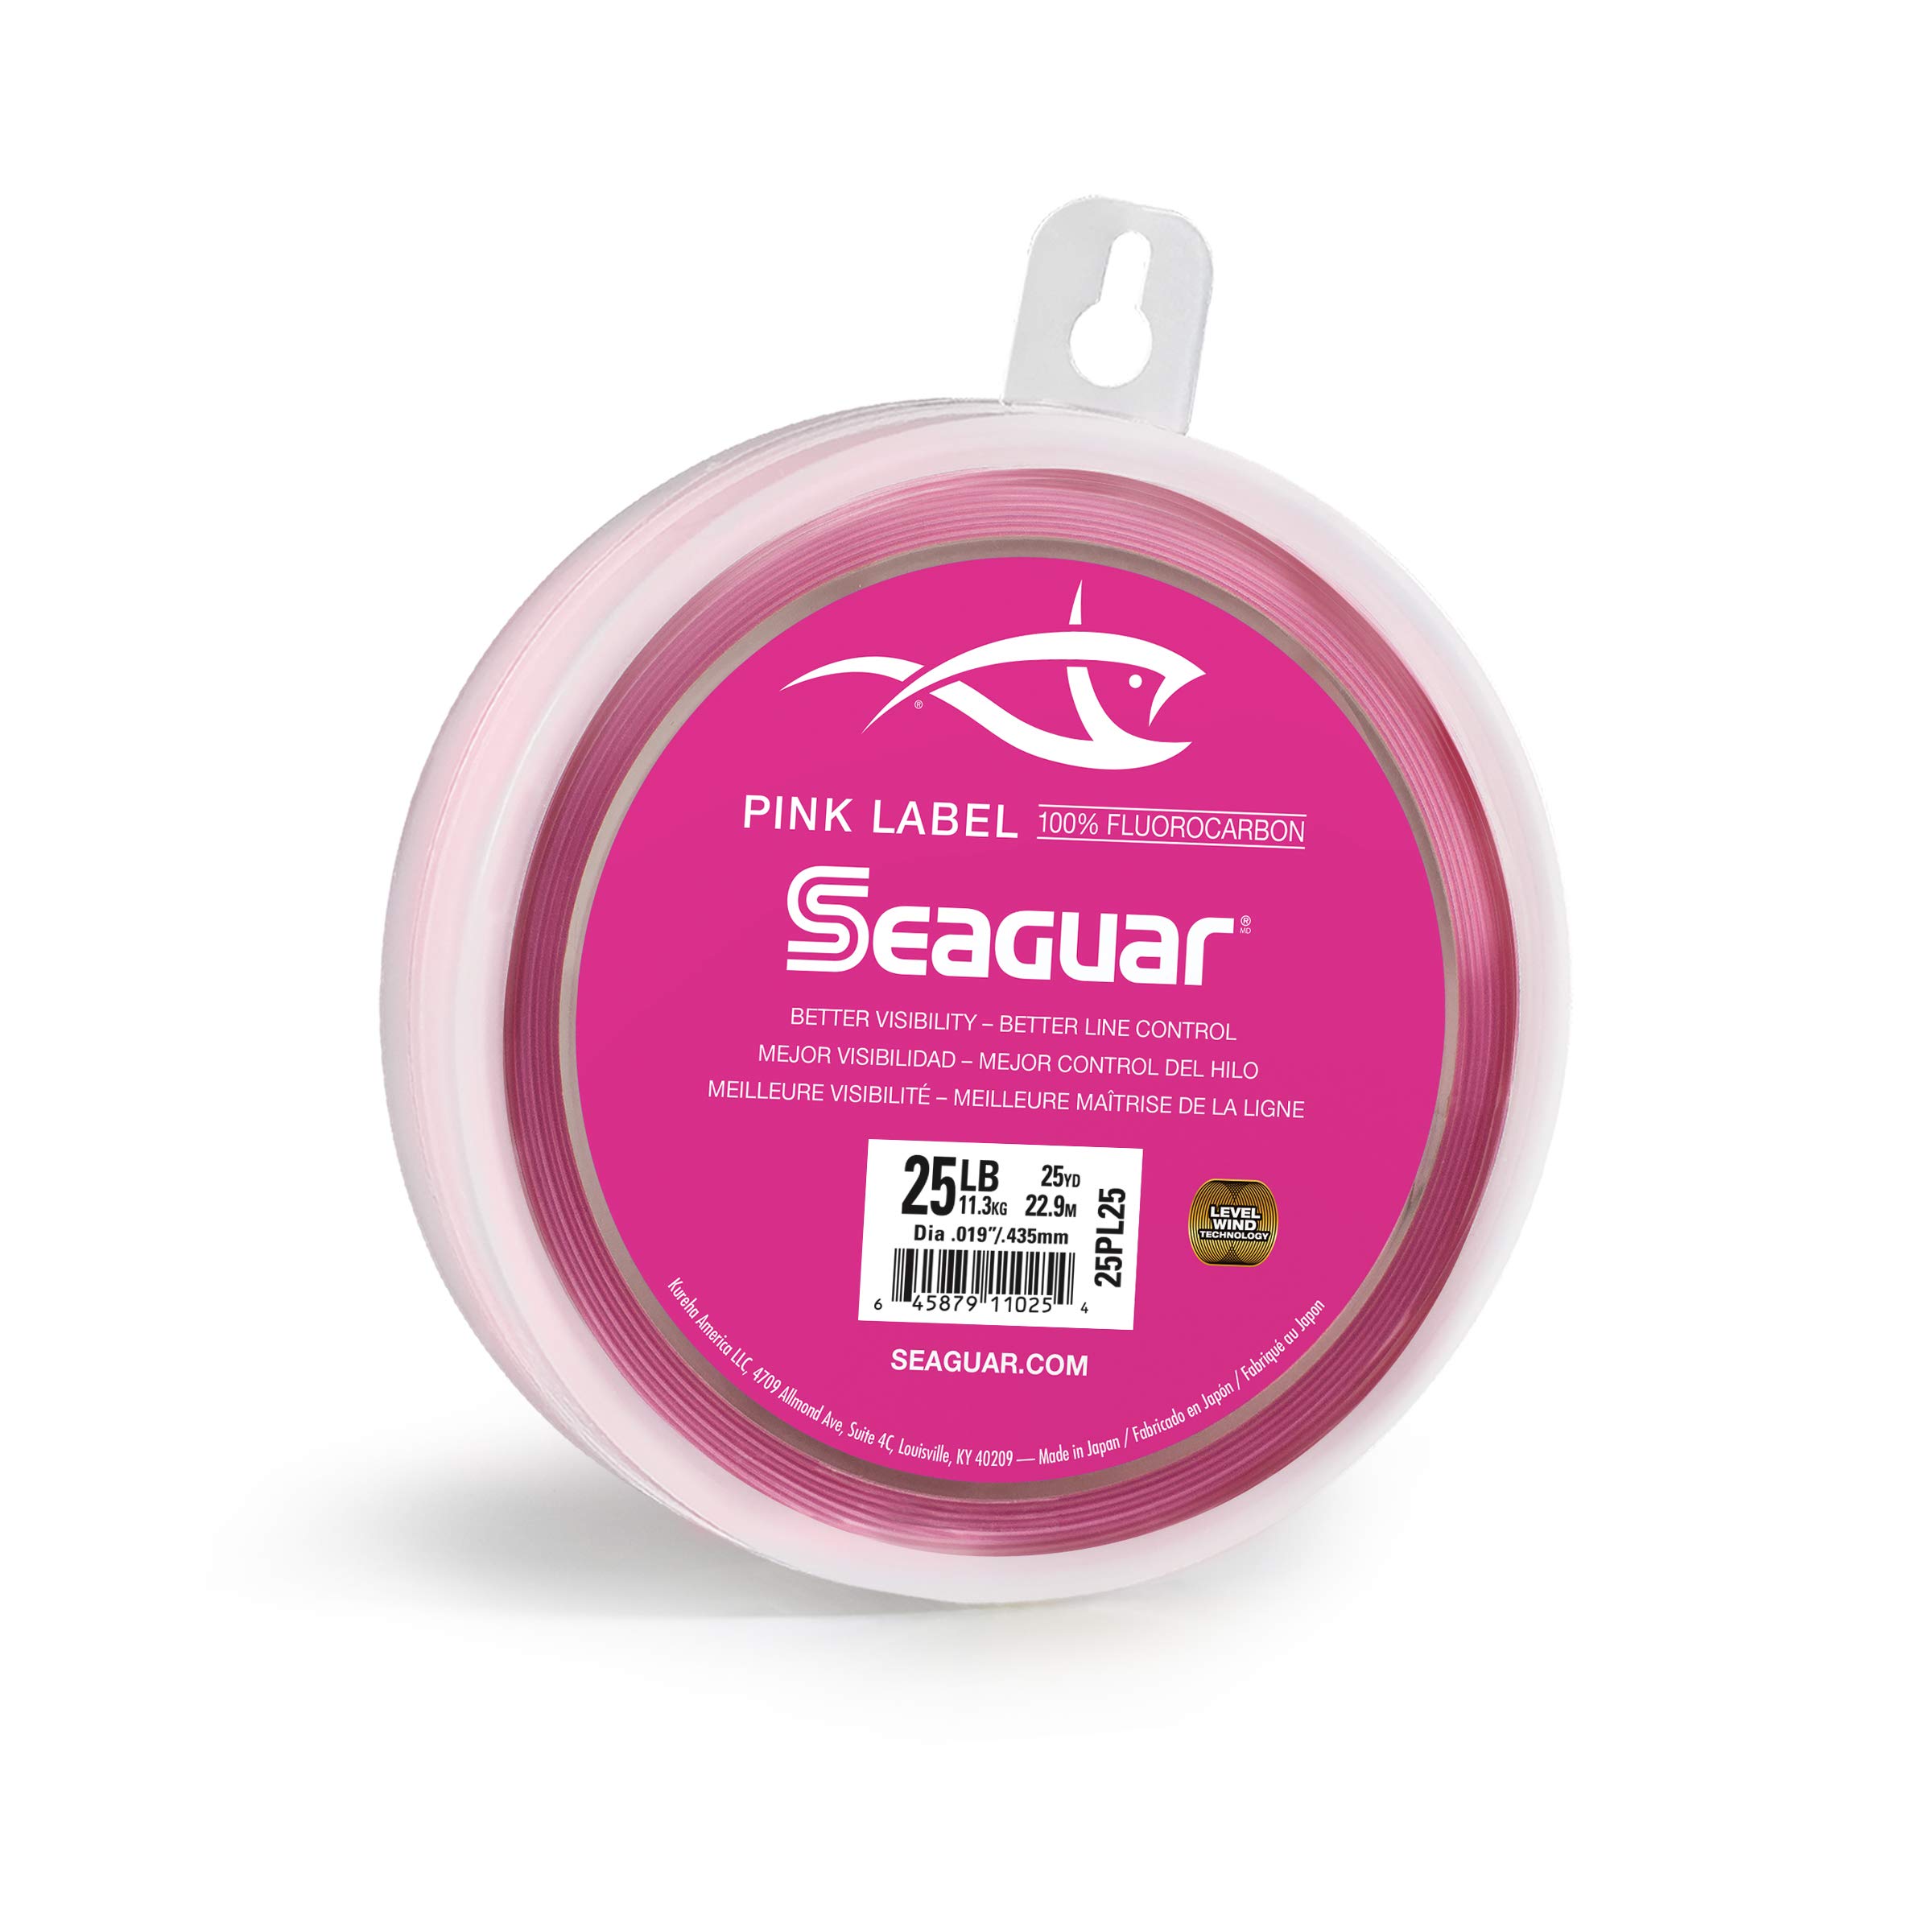 Seaguar Pink Label Fluorocarbon Fishing Leader Line, 100% Fluorocarbon,  Minimal Stretch, Excellent Abrasion Resistance and